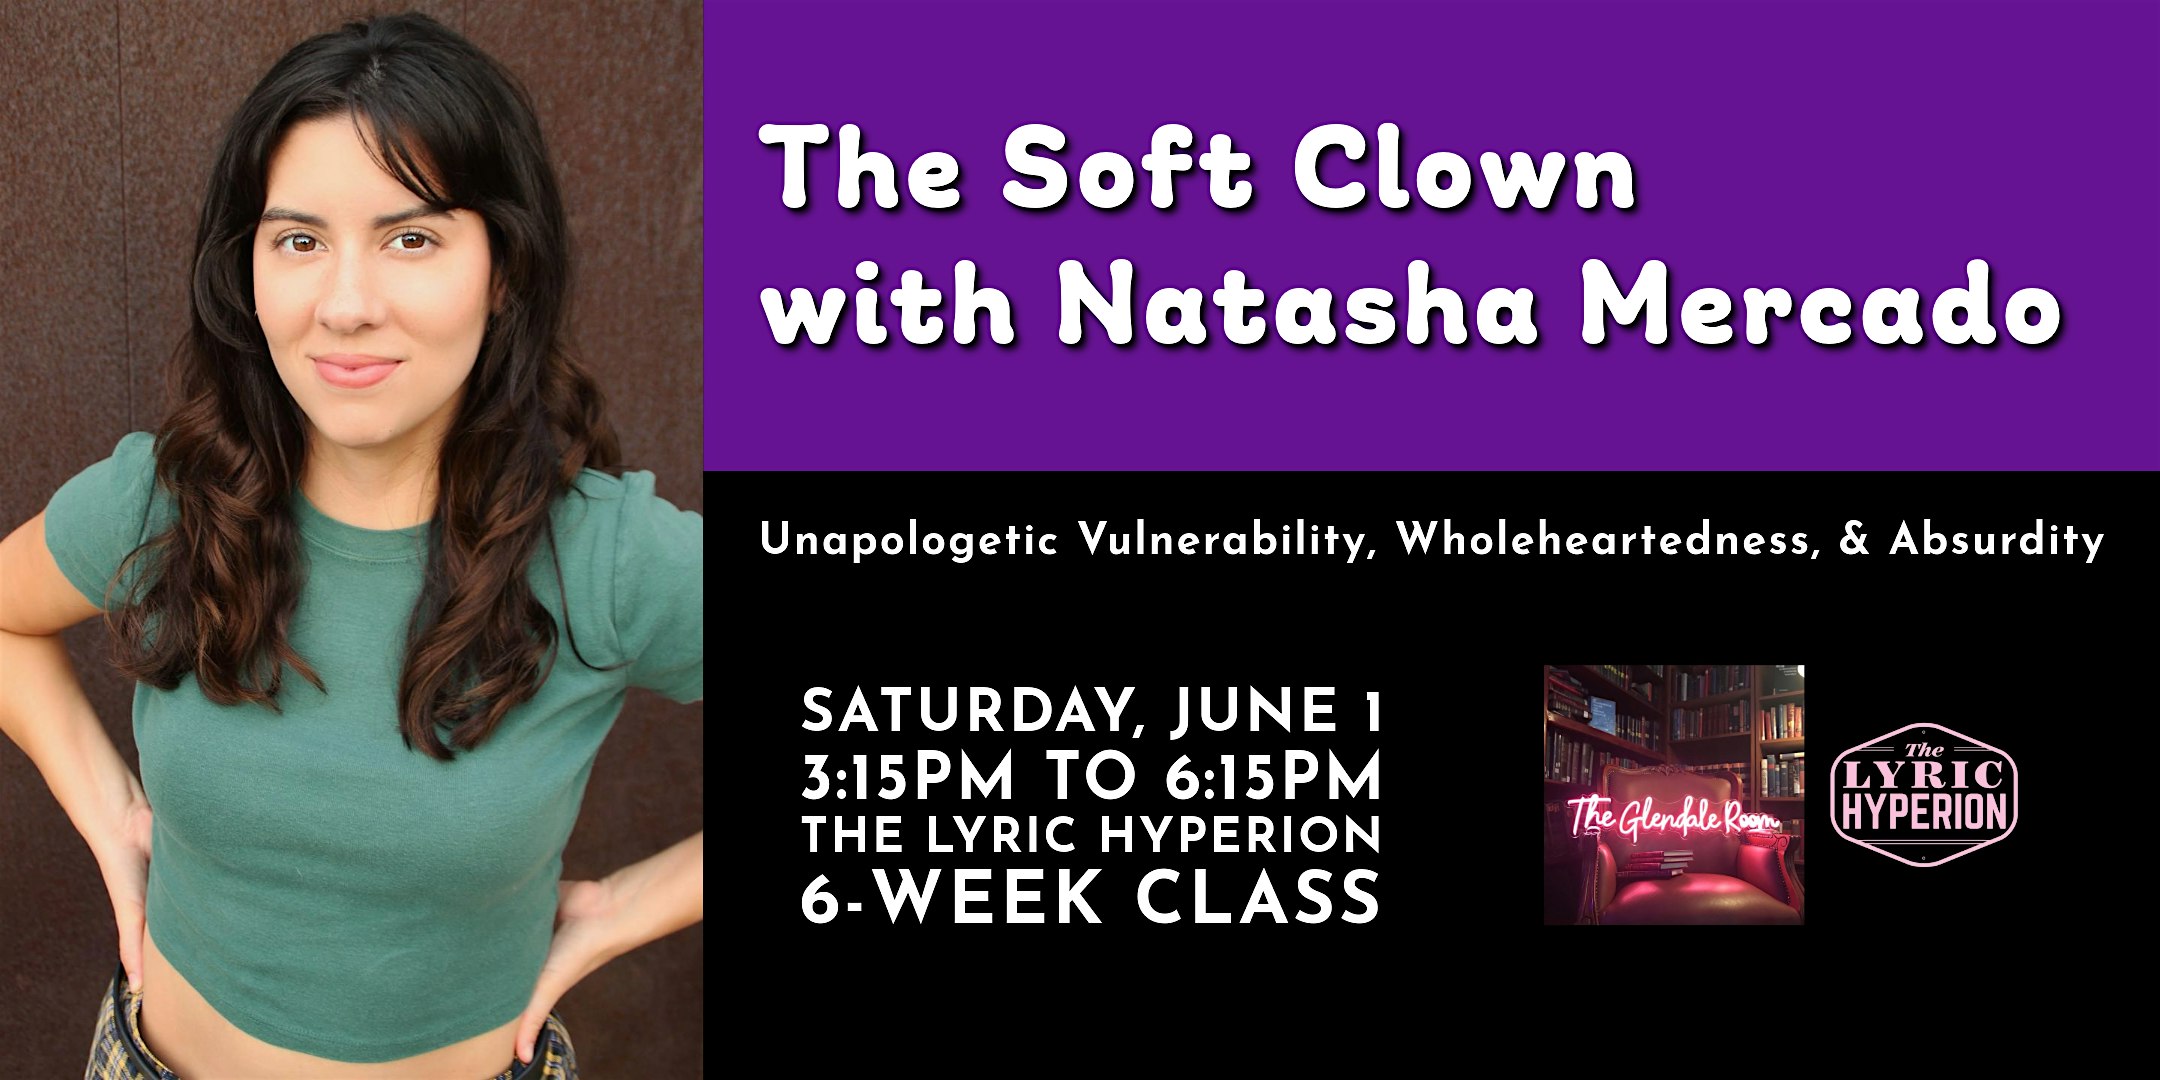 The Soft Clown with Natasha Mercado